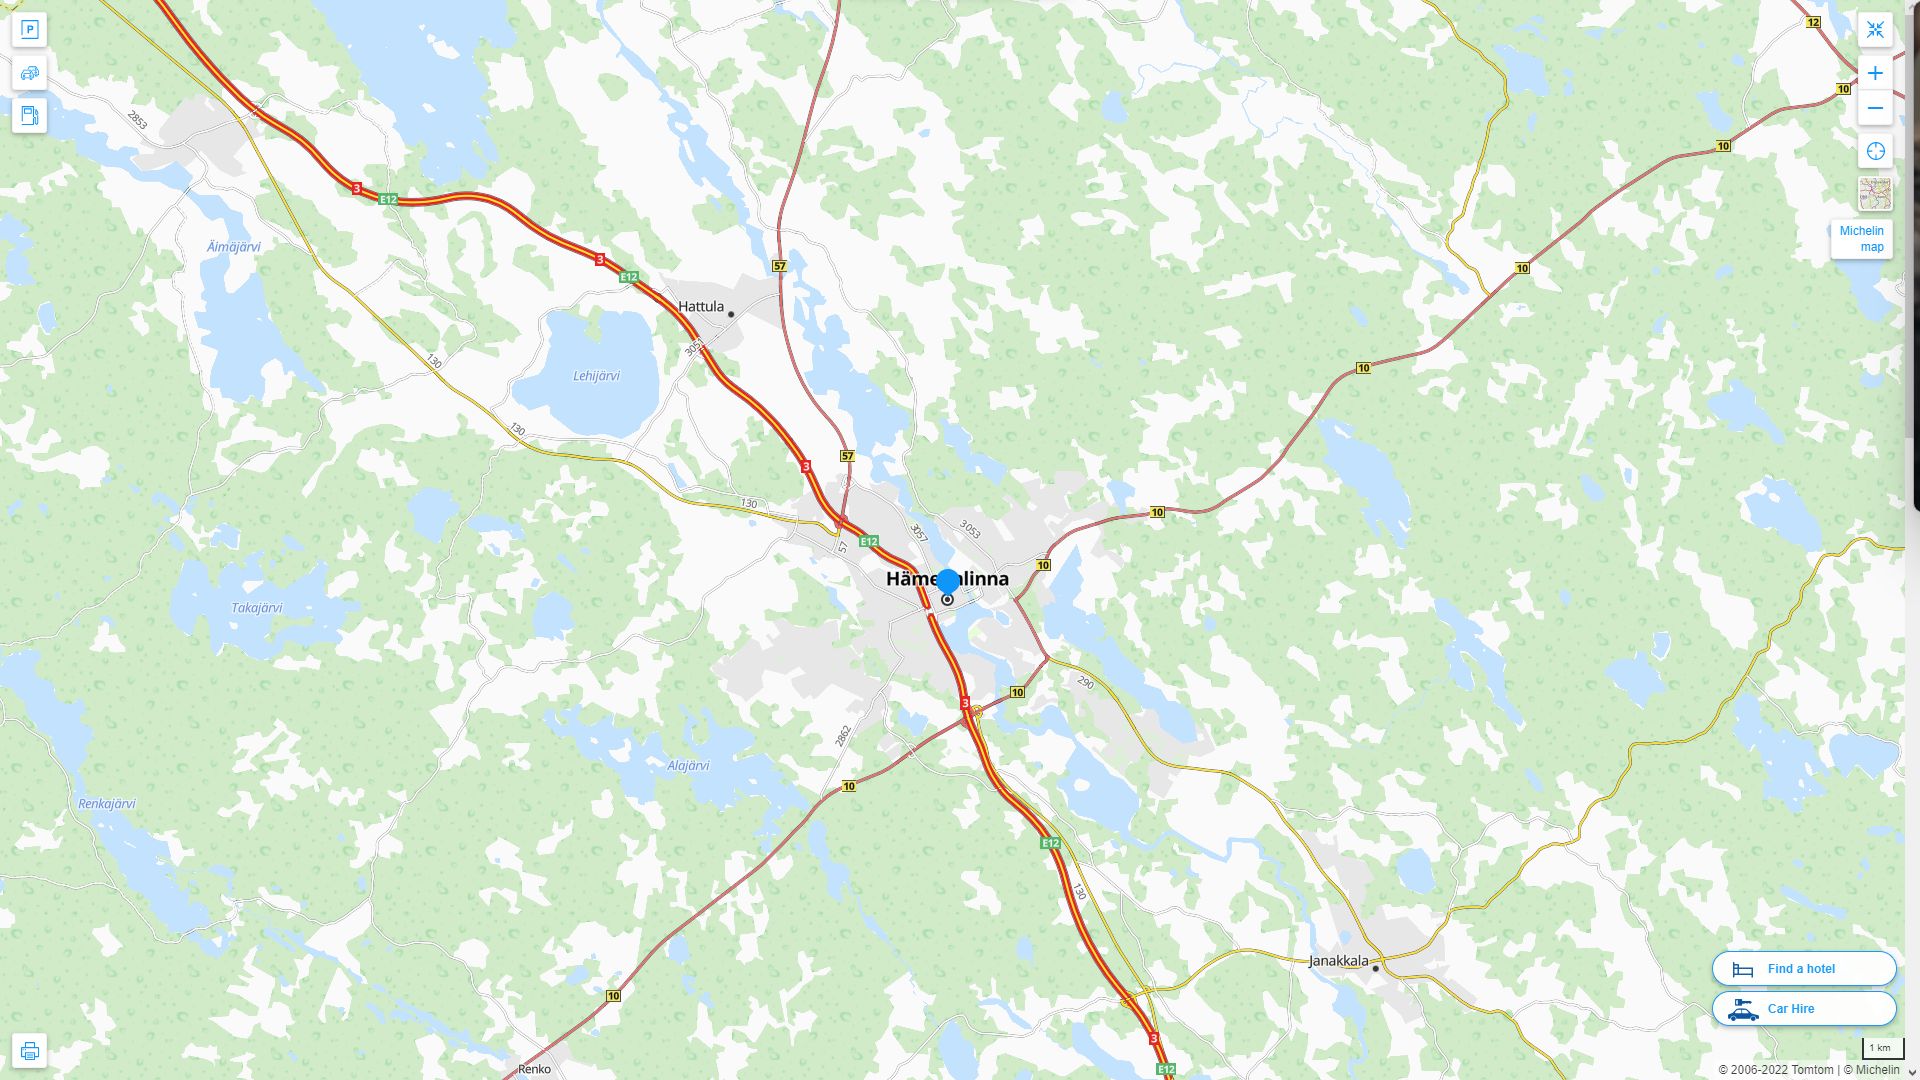 Hameenlinna Highway and Road Map